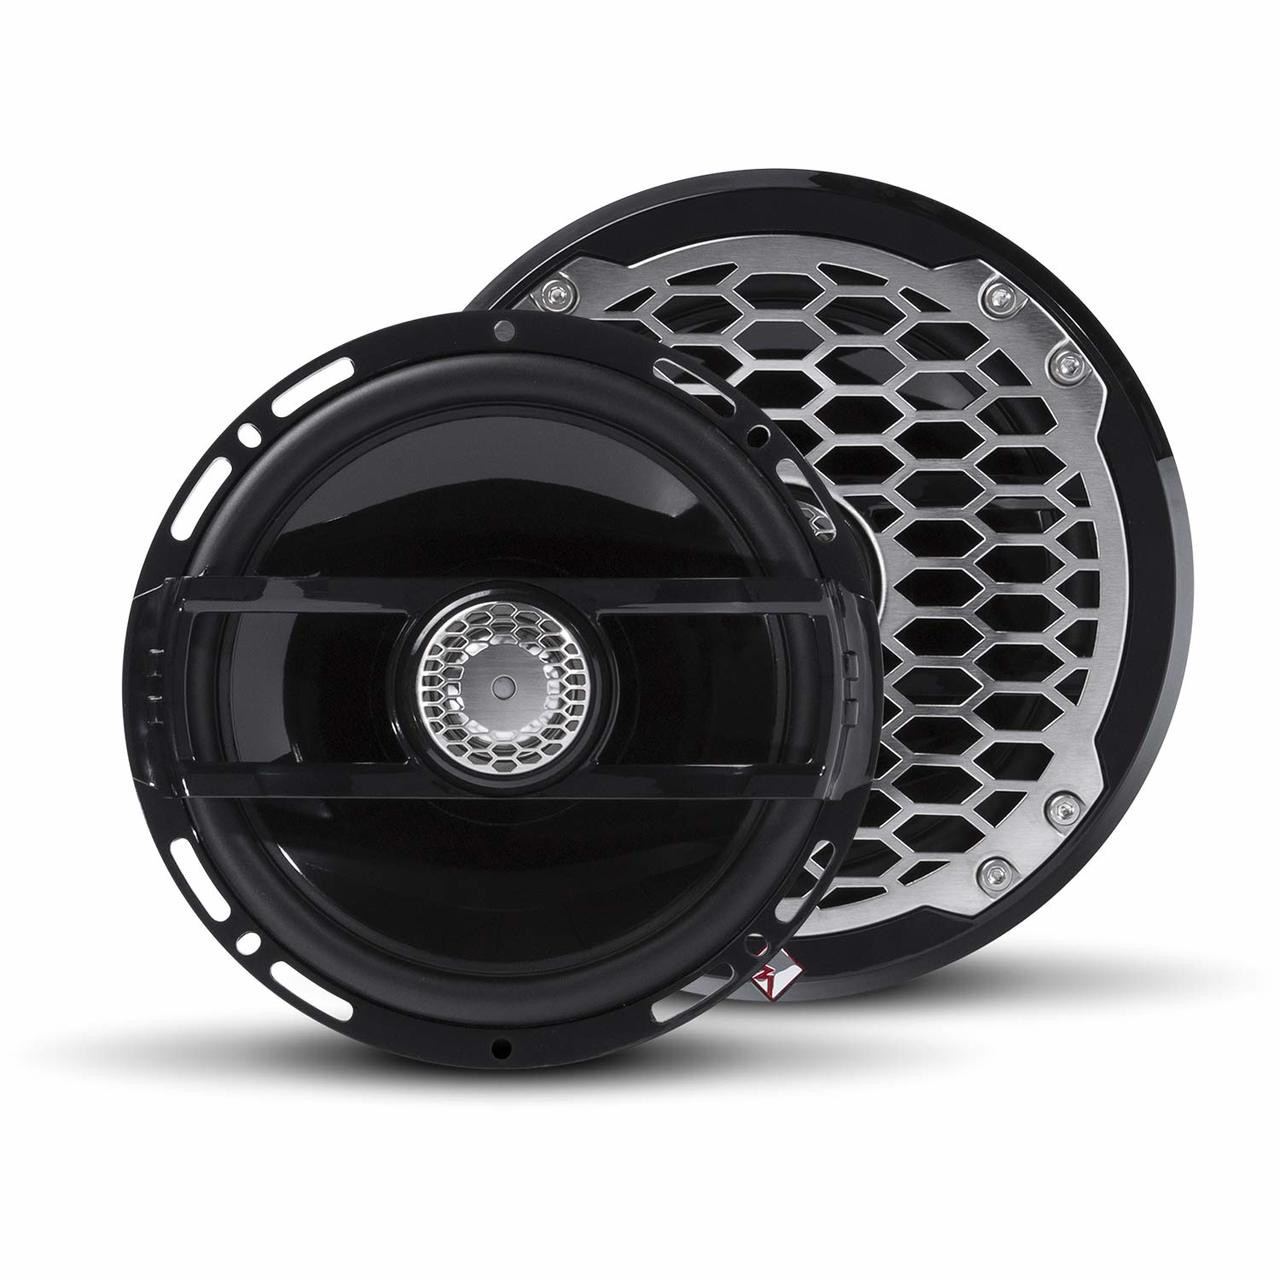 Rockford Fosgate PM2652B Punch Marine 6.5" Full Range Speakers - Black (Pair)